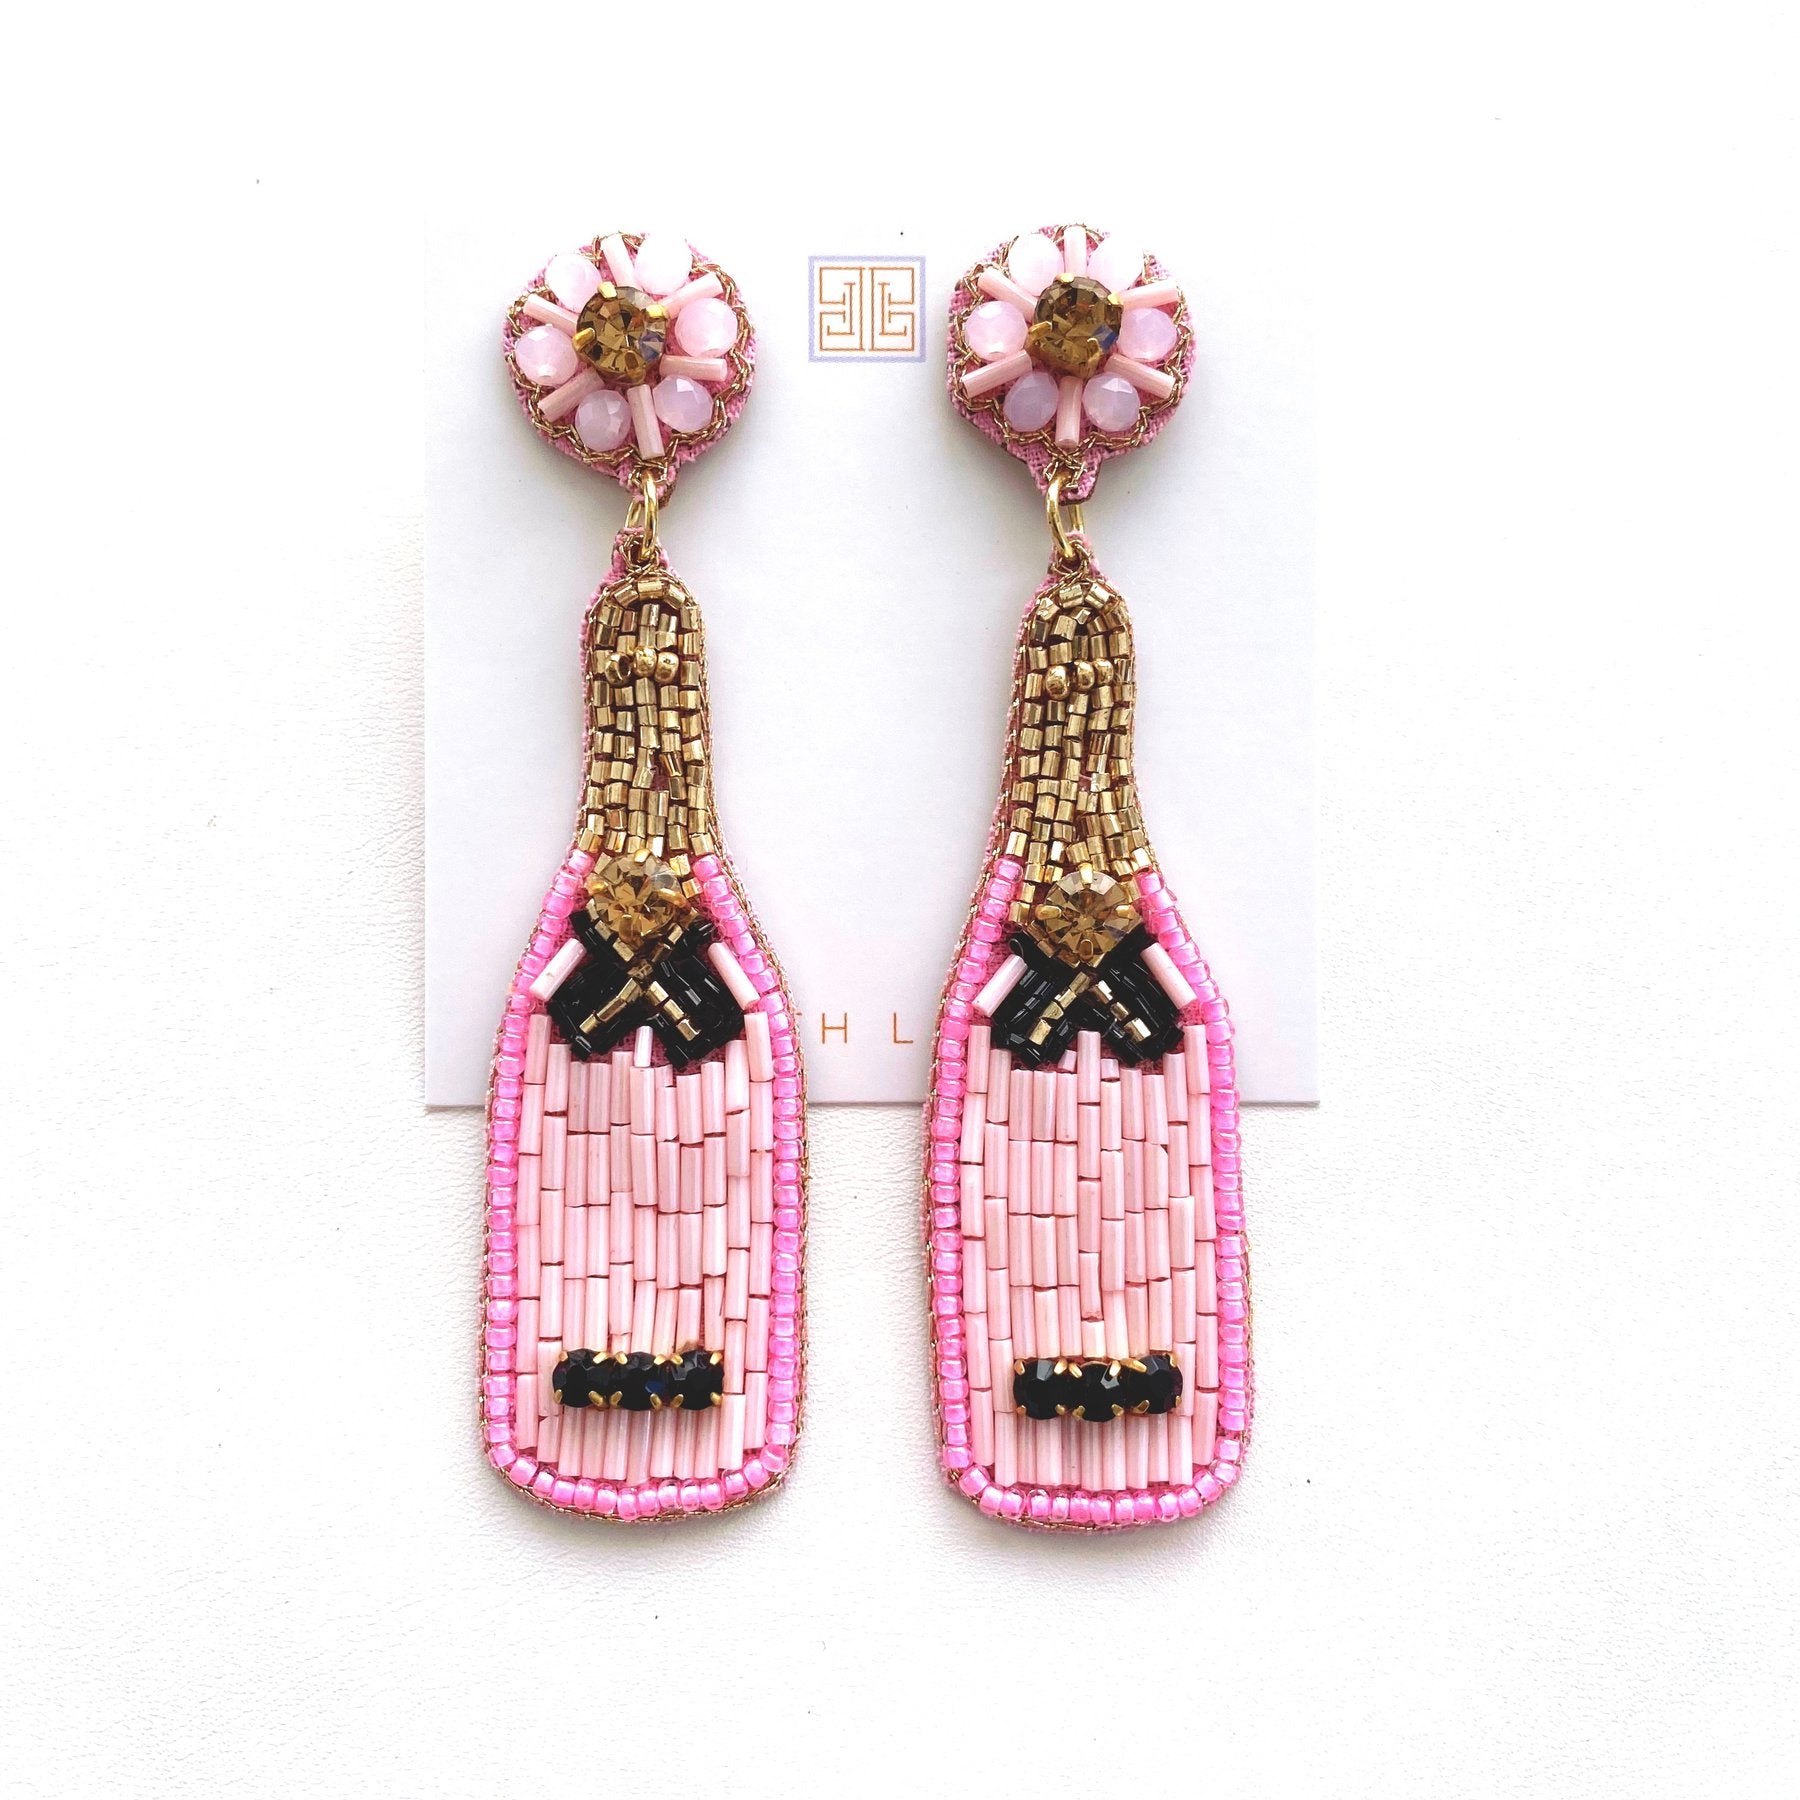 Rosé/Light Pink Champagne Earrings